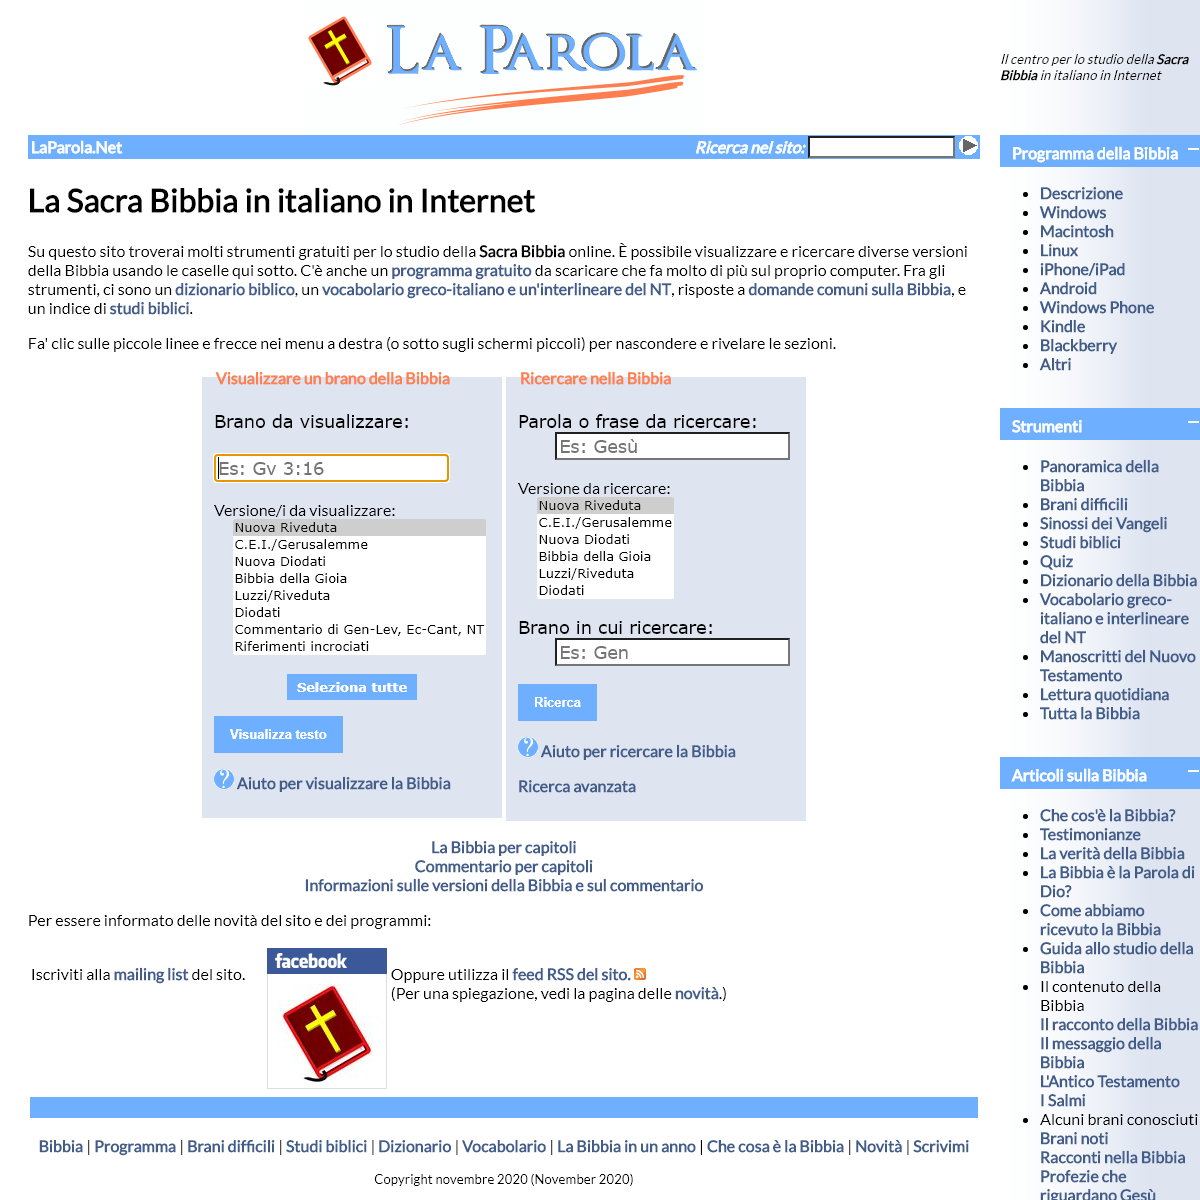 A complete backup of laparola.net